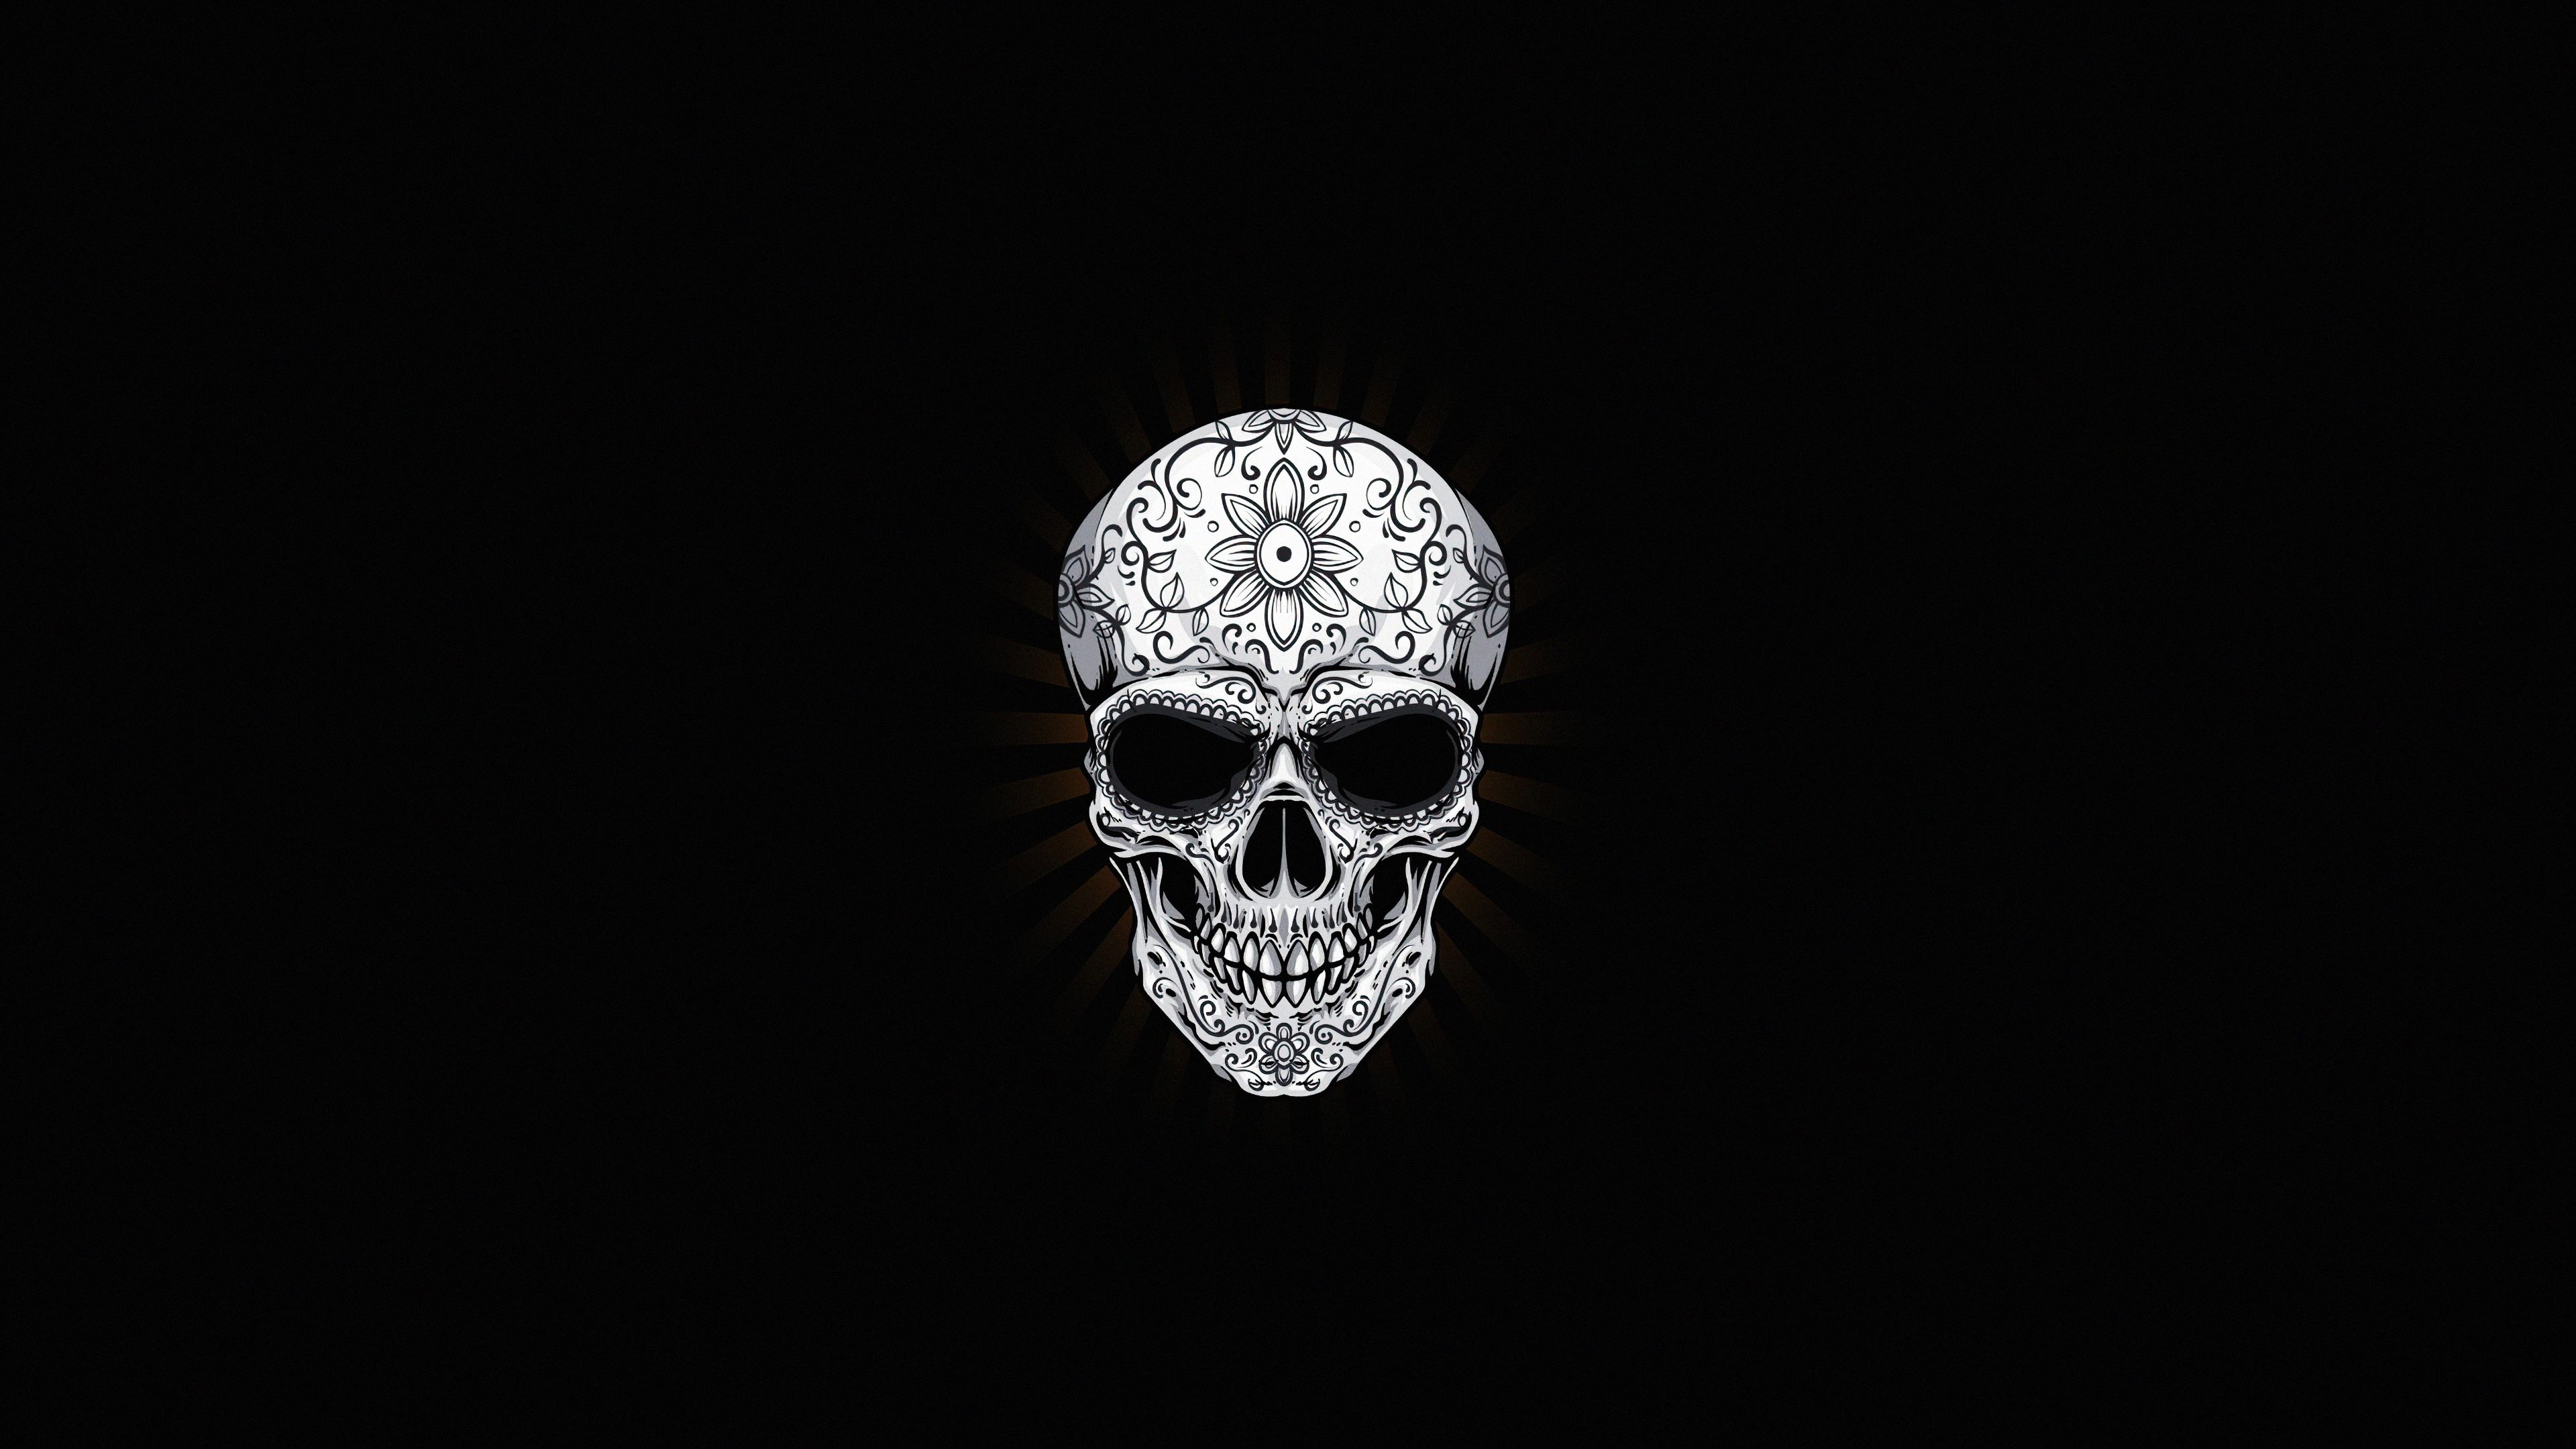 White Skull Dark 4k, HD Artist, 4k Wallpaper, Image, Background, Photo and Picture